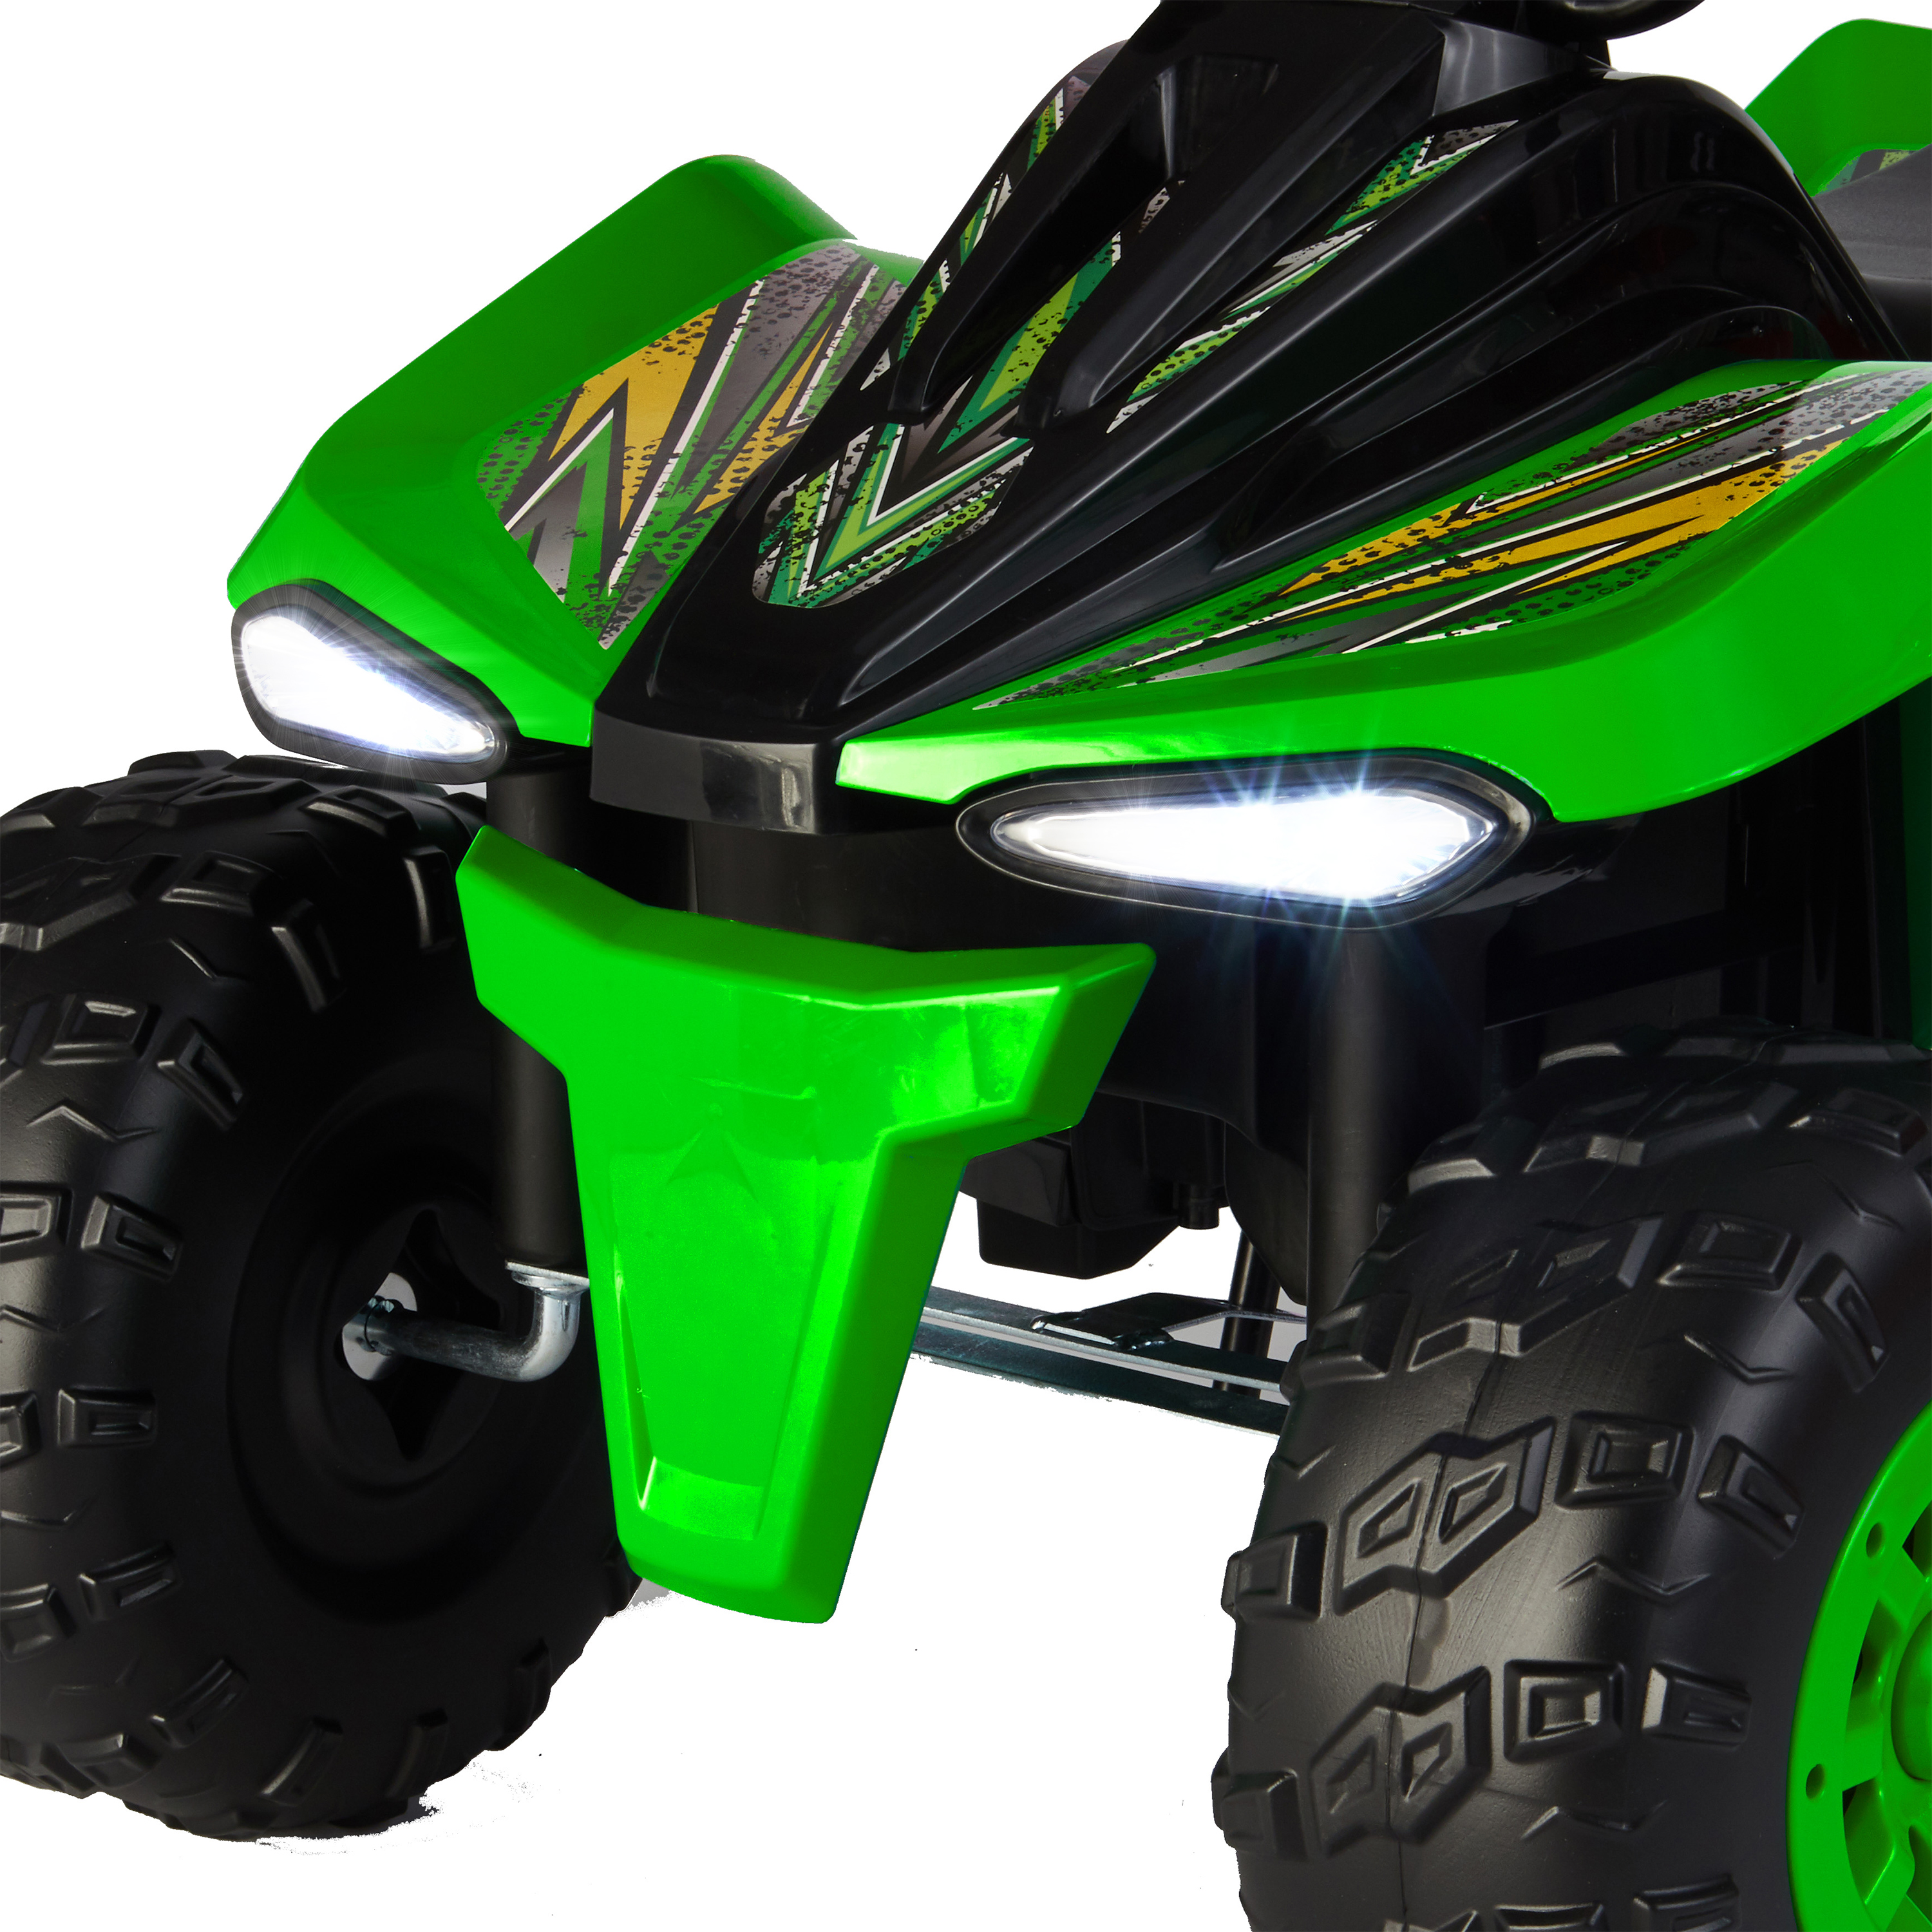 Kalee 12V Giant Quad ATV Battery Powered Ride On, Green - image 3 of 8